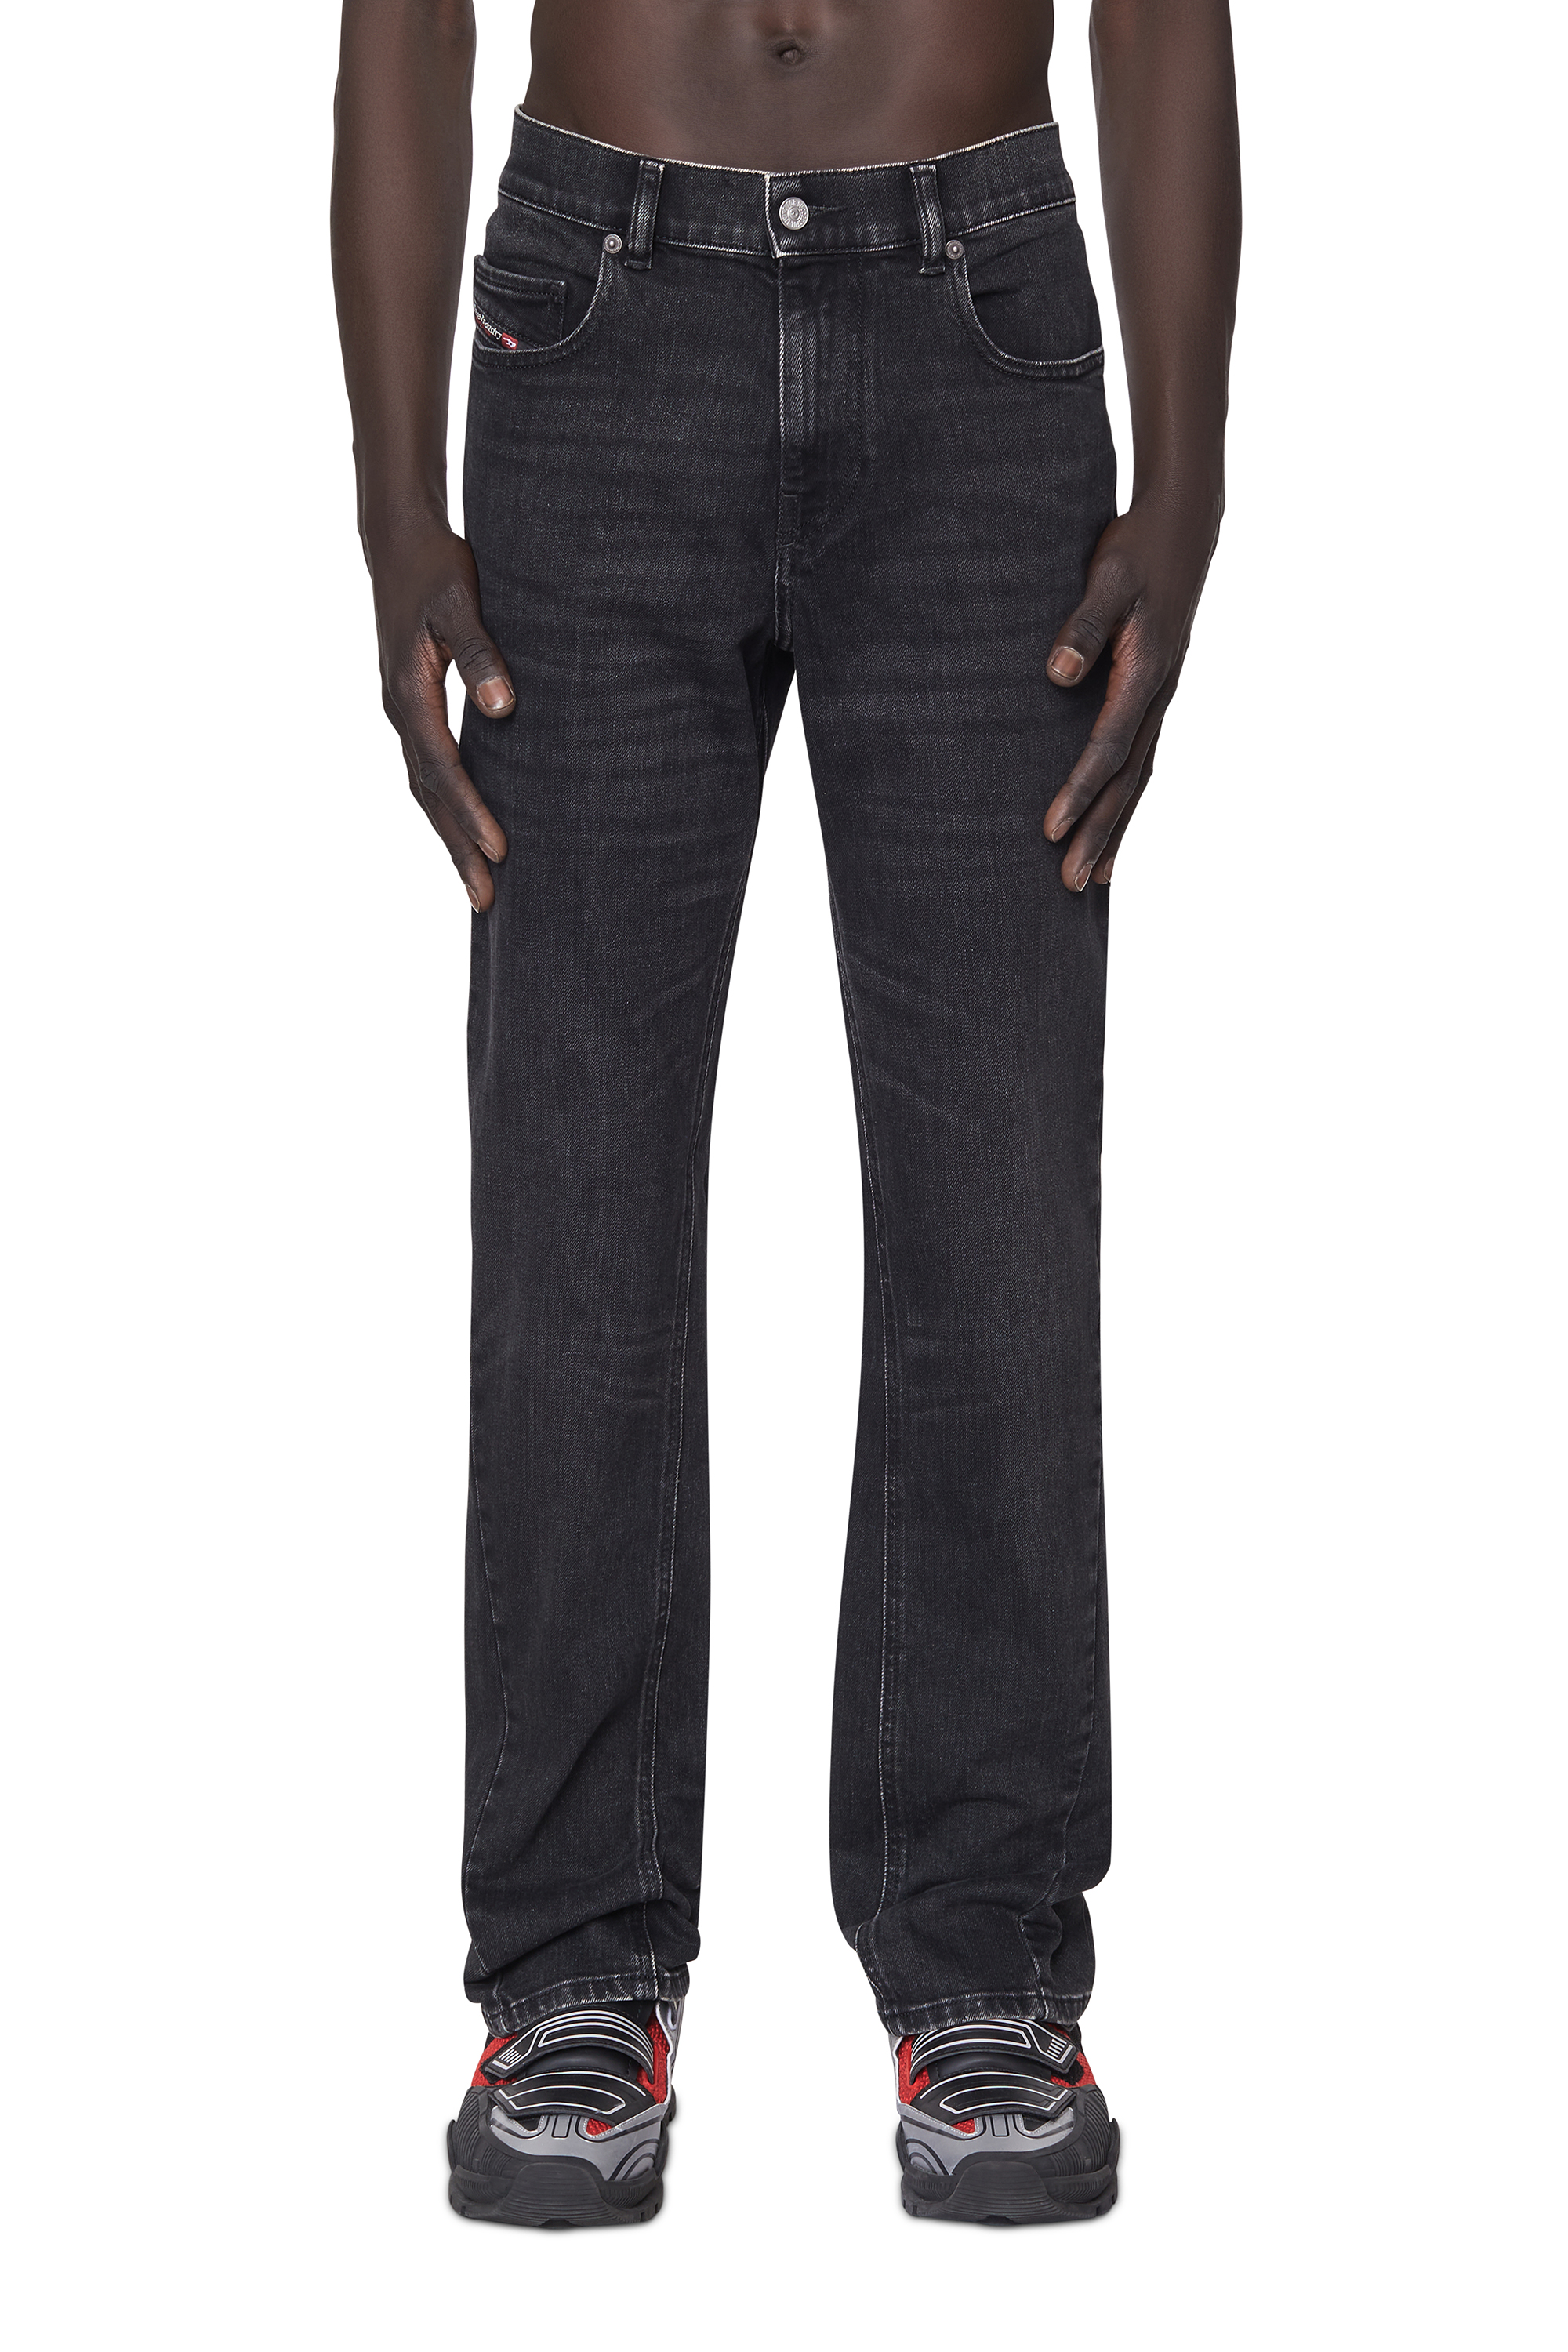 Bootcut Jeans 2021 D-Vocs 09B83, Black/Dark grey - Jeans